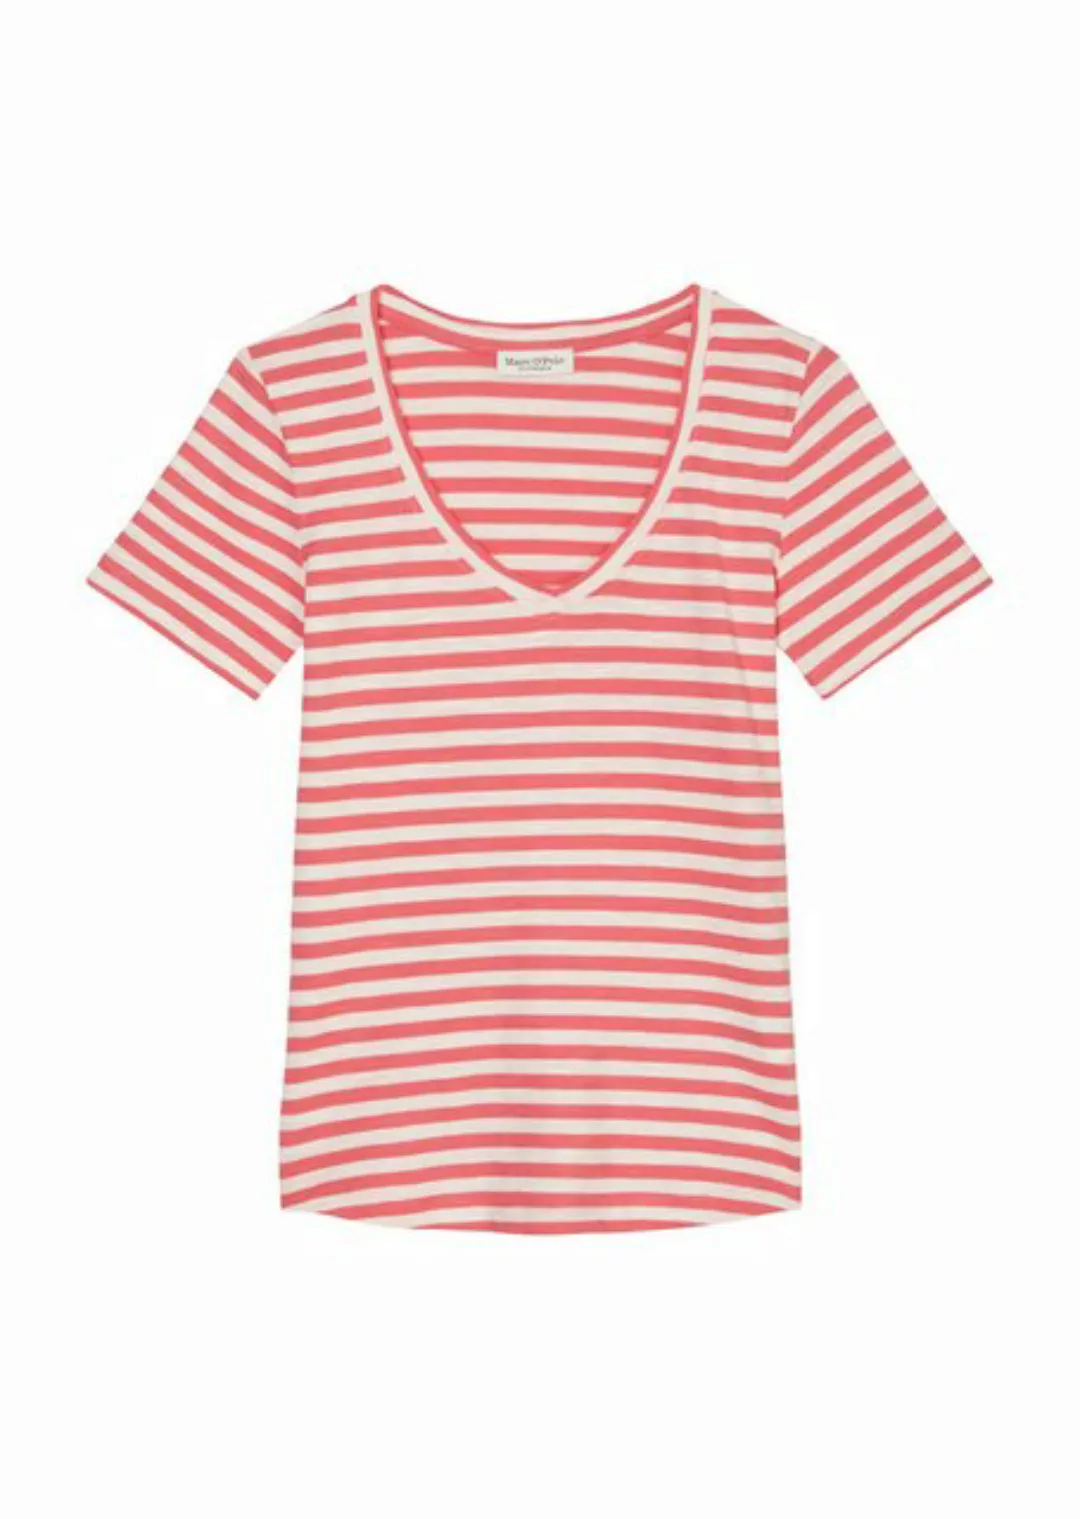 Marc O'Polo Shirtbluse T-shirt, short sleeve, v-neck, stri günstig online kaufen